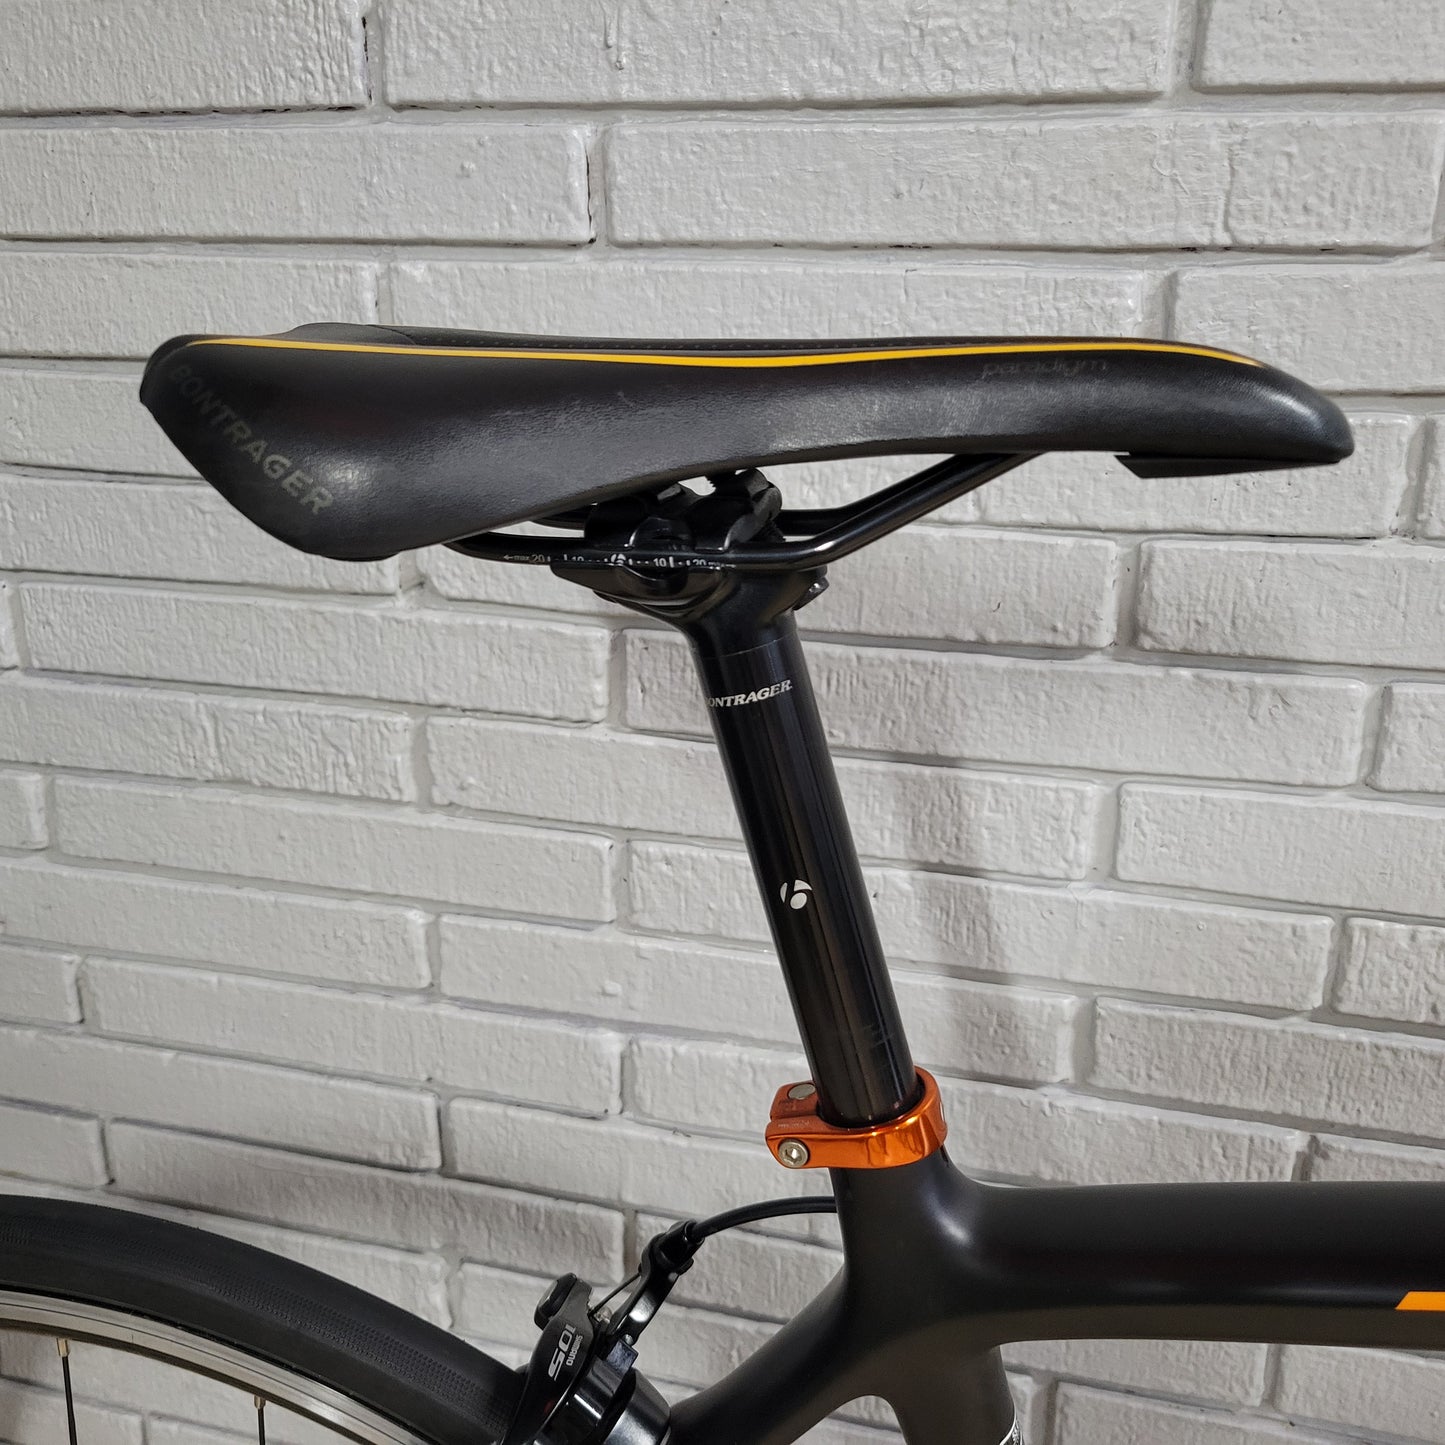 2015 Trek Emonda S5 Carbon Road Bike (56cm)